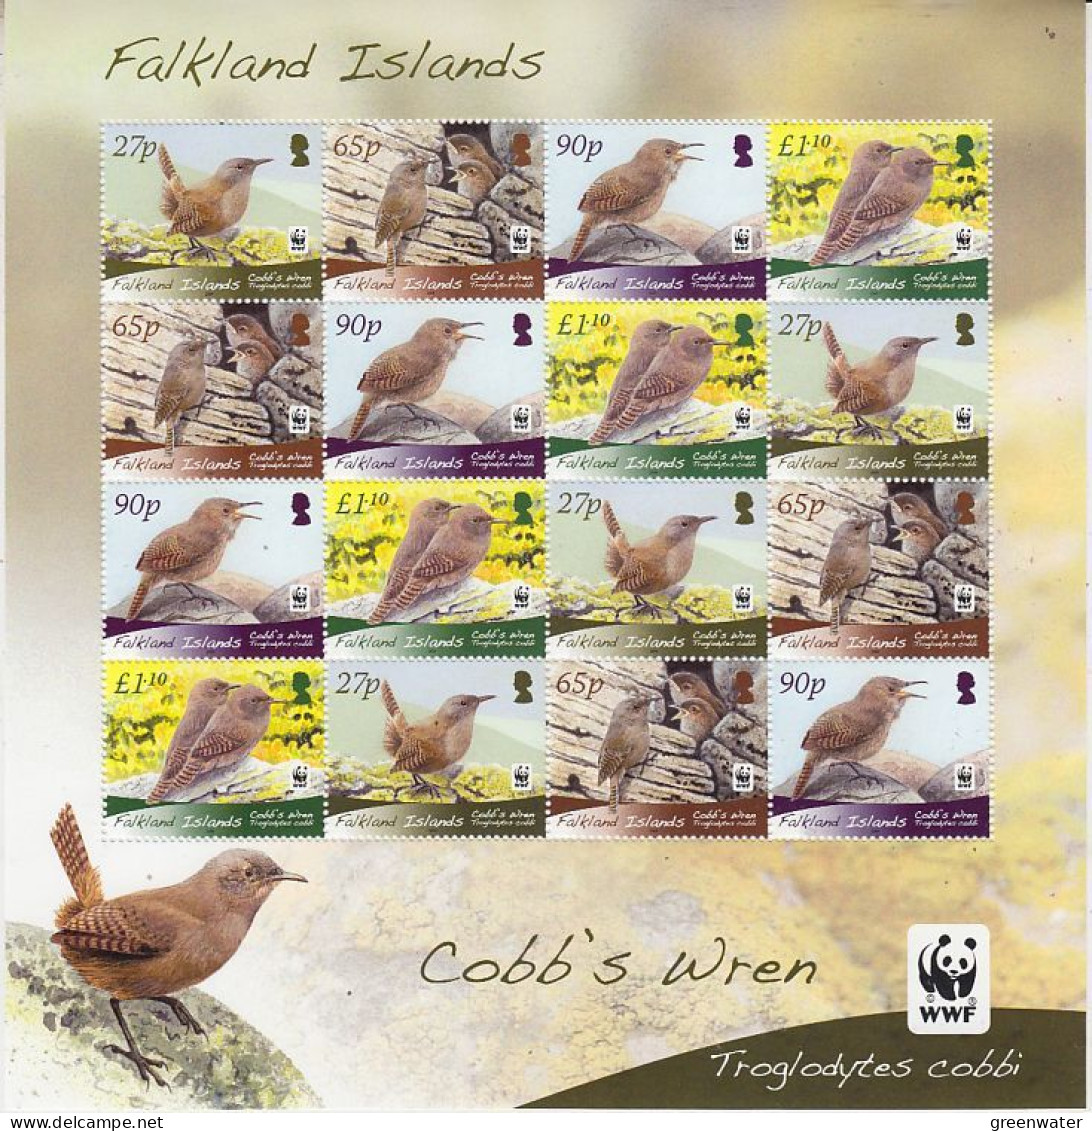 Falkland Islands 2009 Cobb's Wren / WWF Sheetlet ** Mnh (FG196) - Falkland